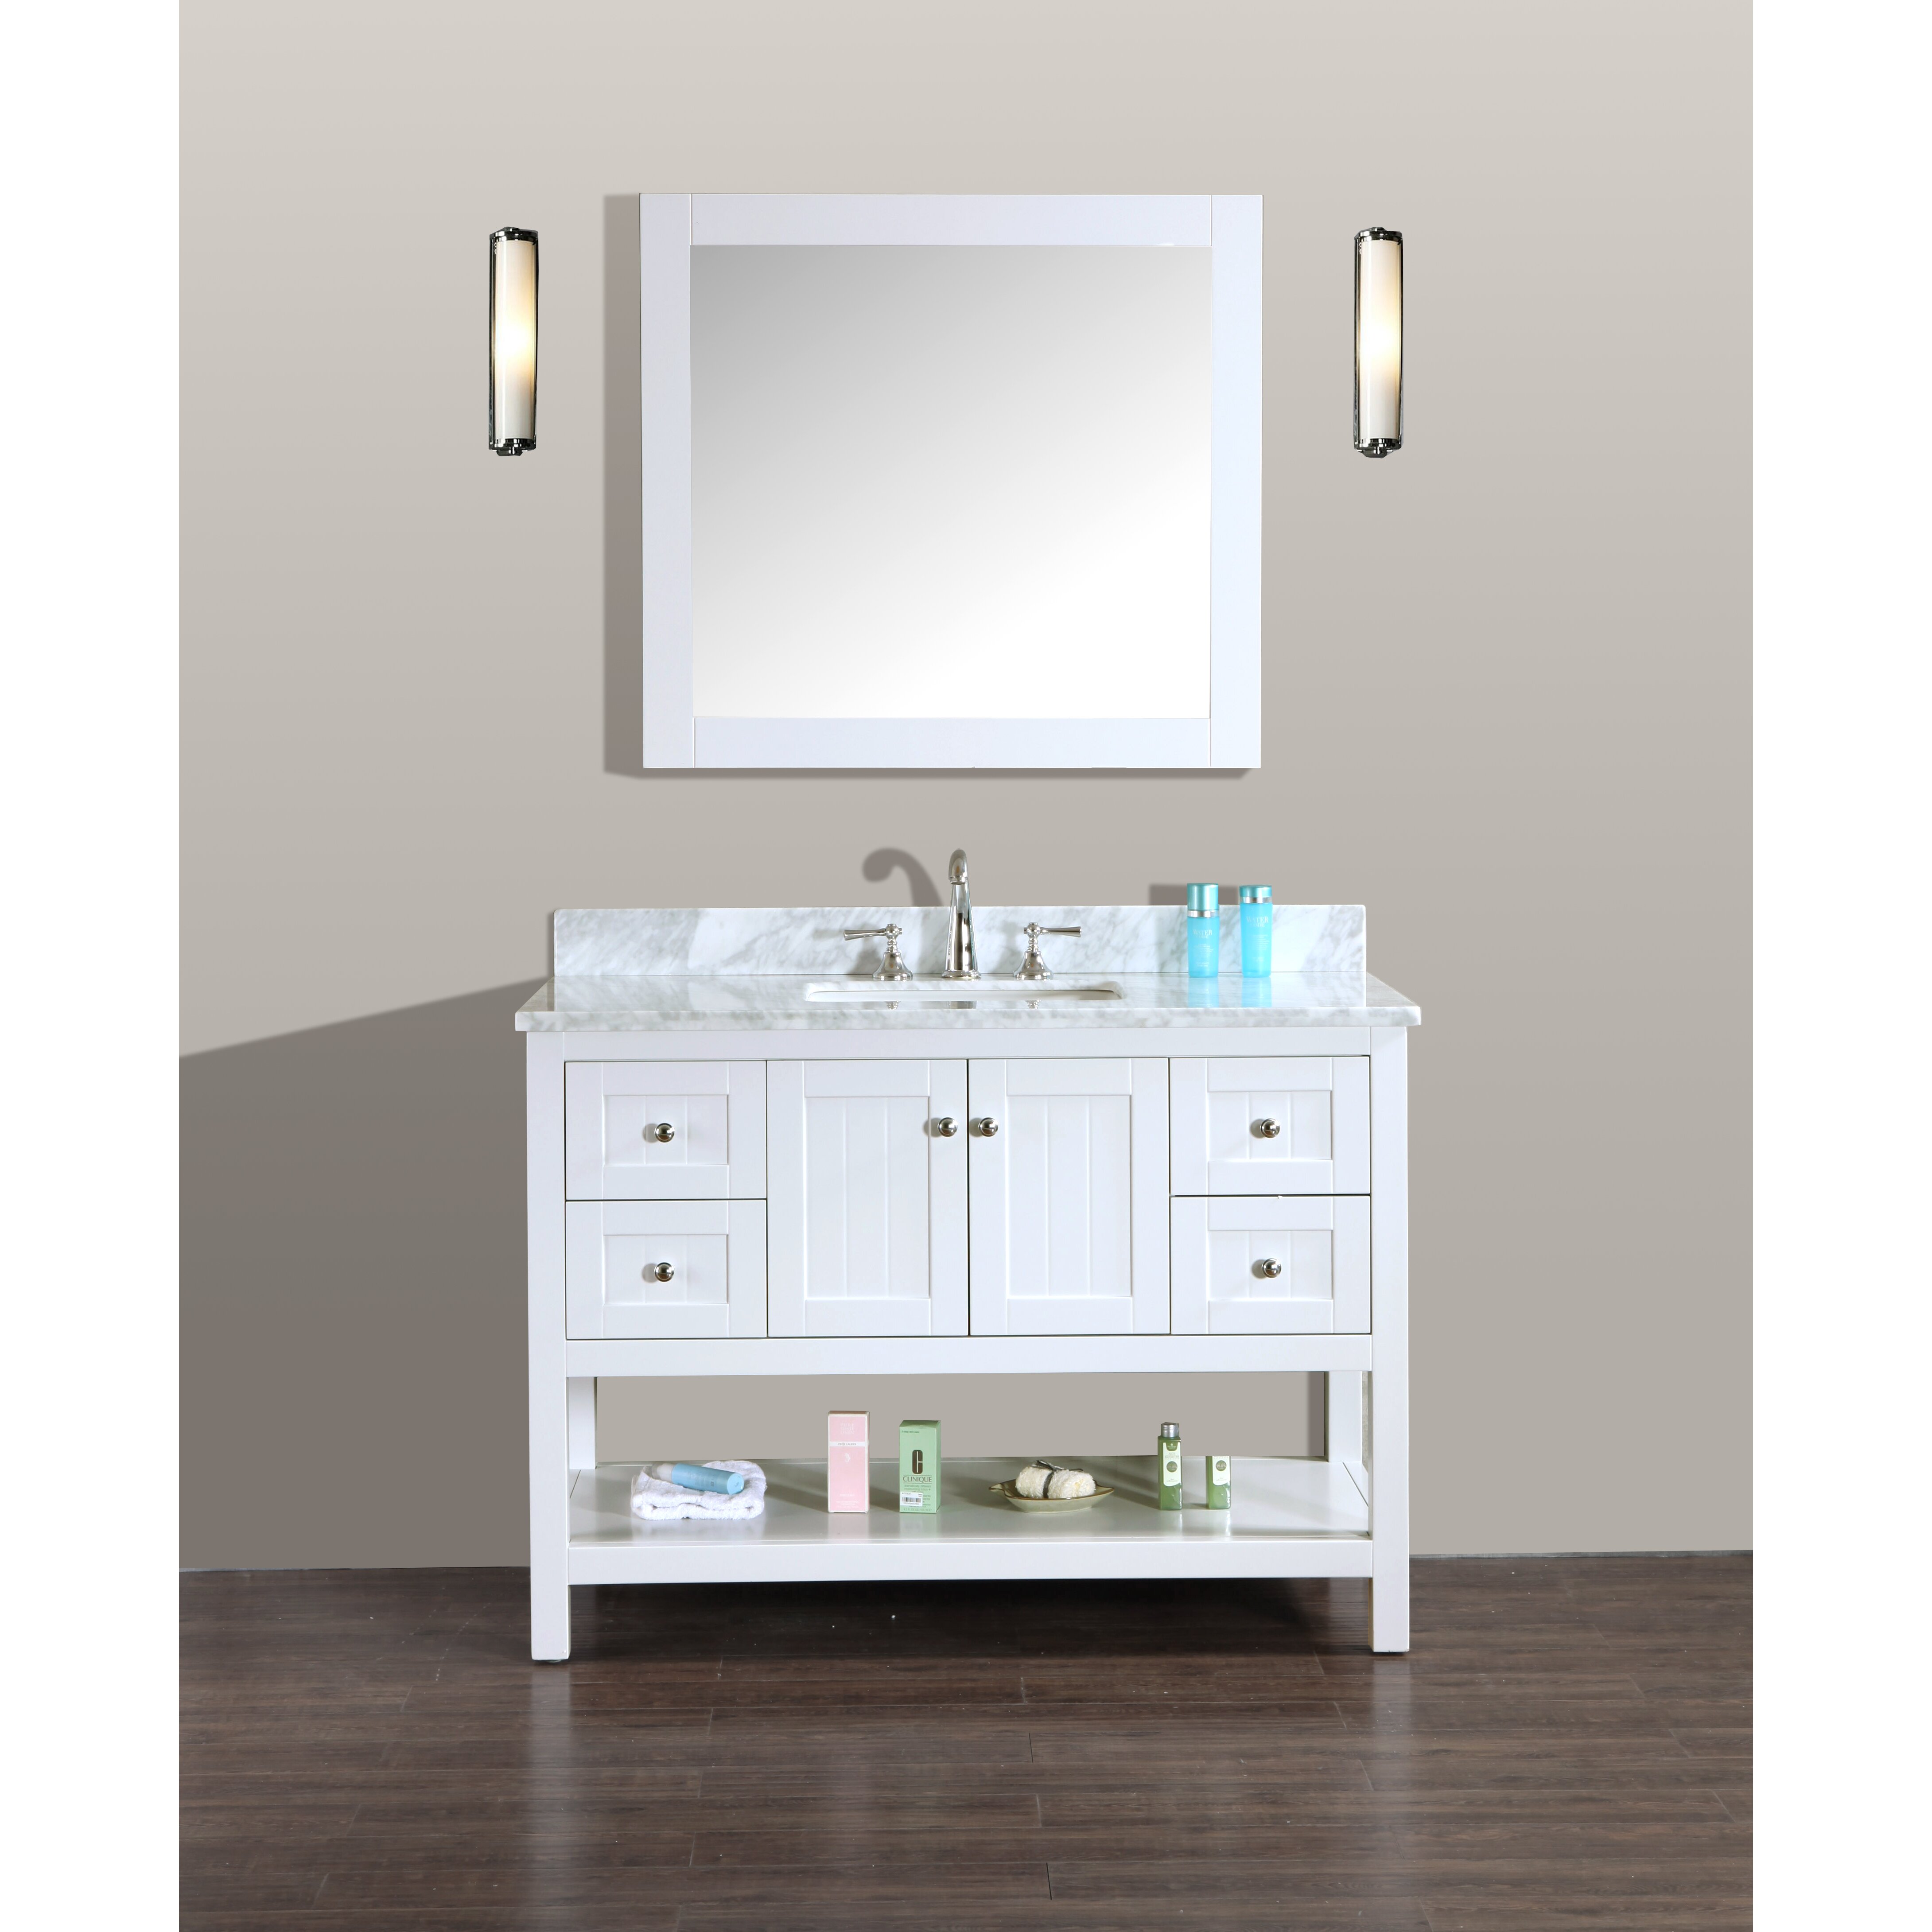 48 Bathroom Mirror Bathroom Mirror Lighting Over Sink Ratio